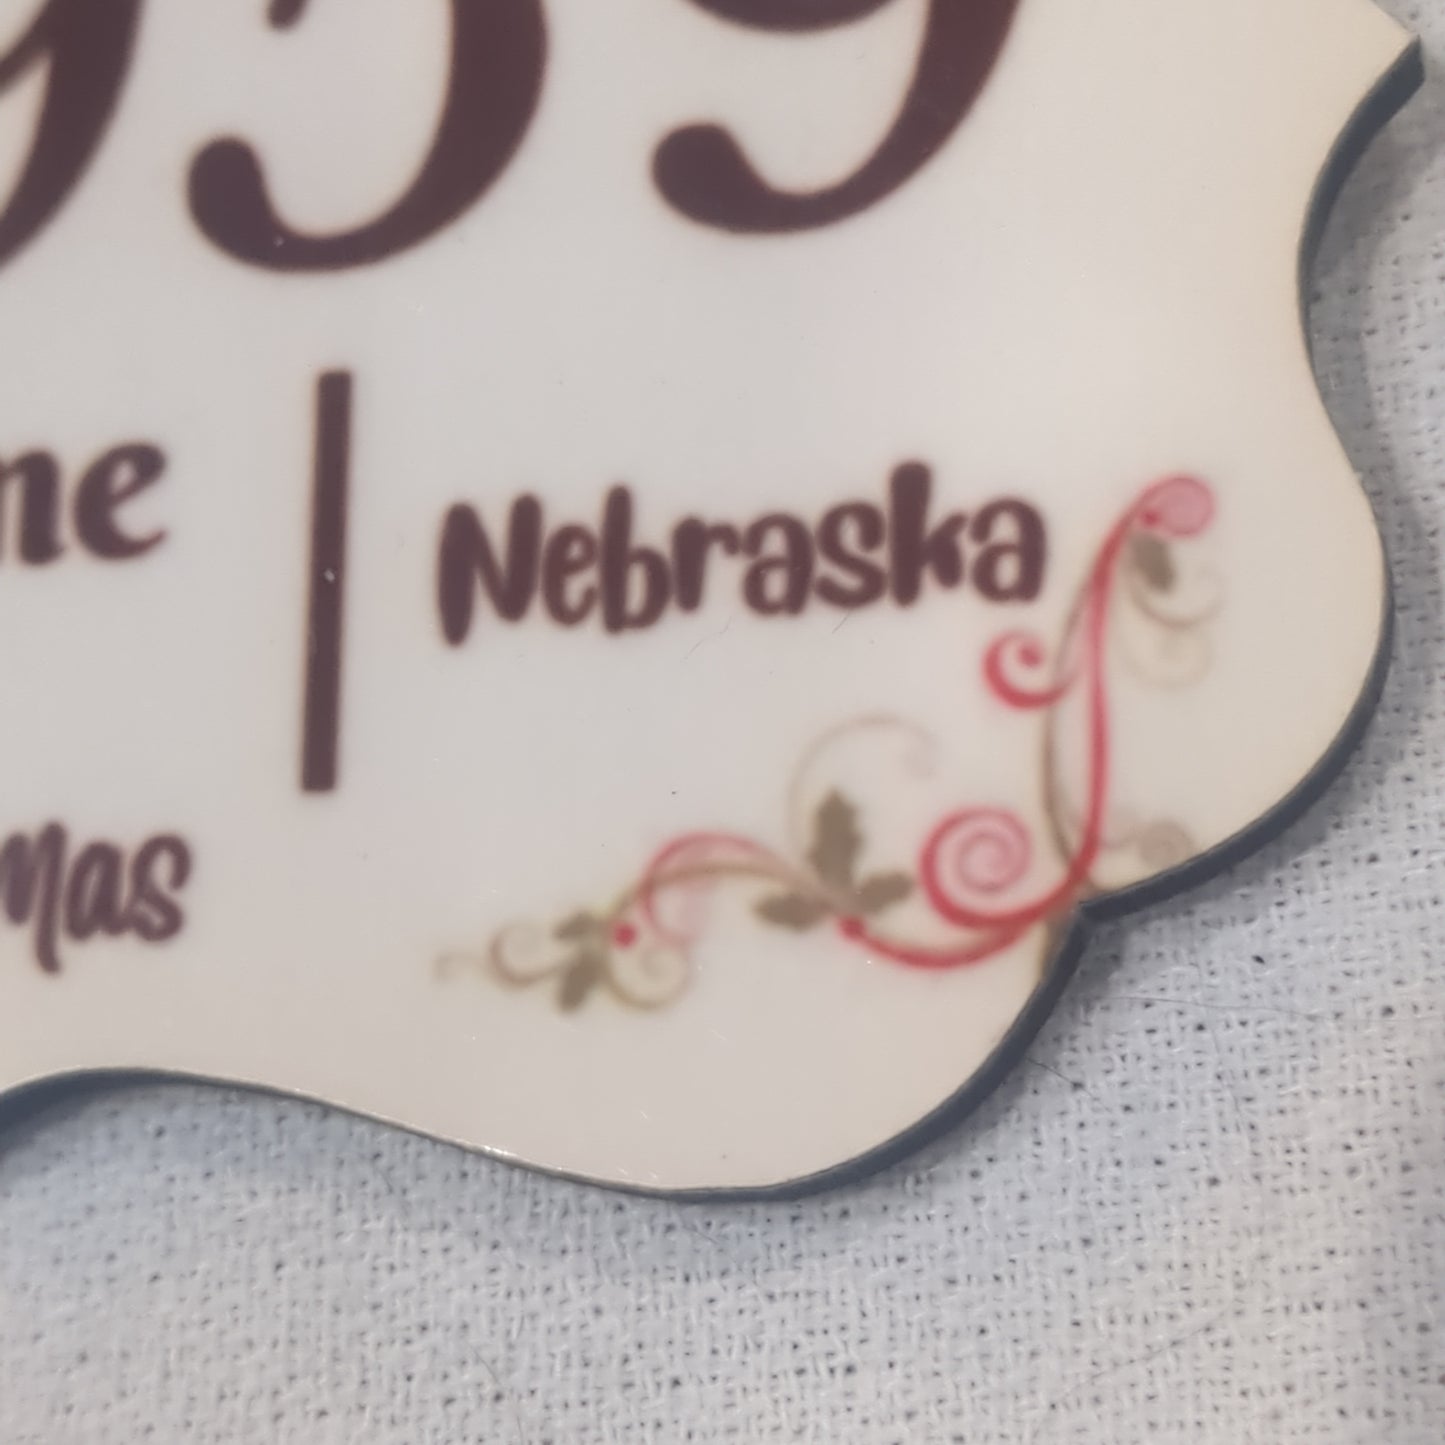 Minden Nebraska's ZIP Code Ornament floral 1 special order